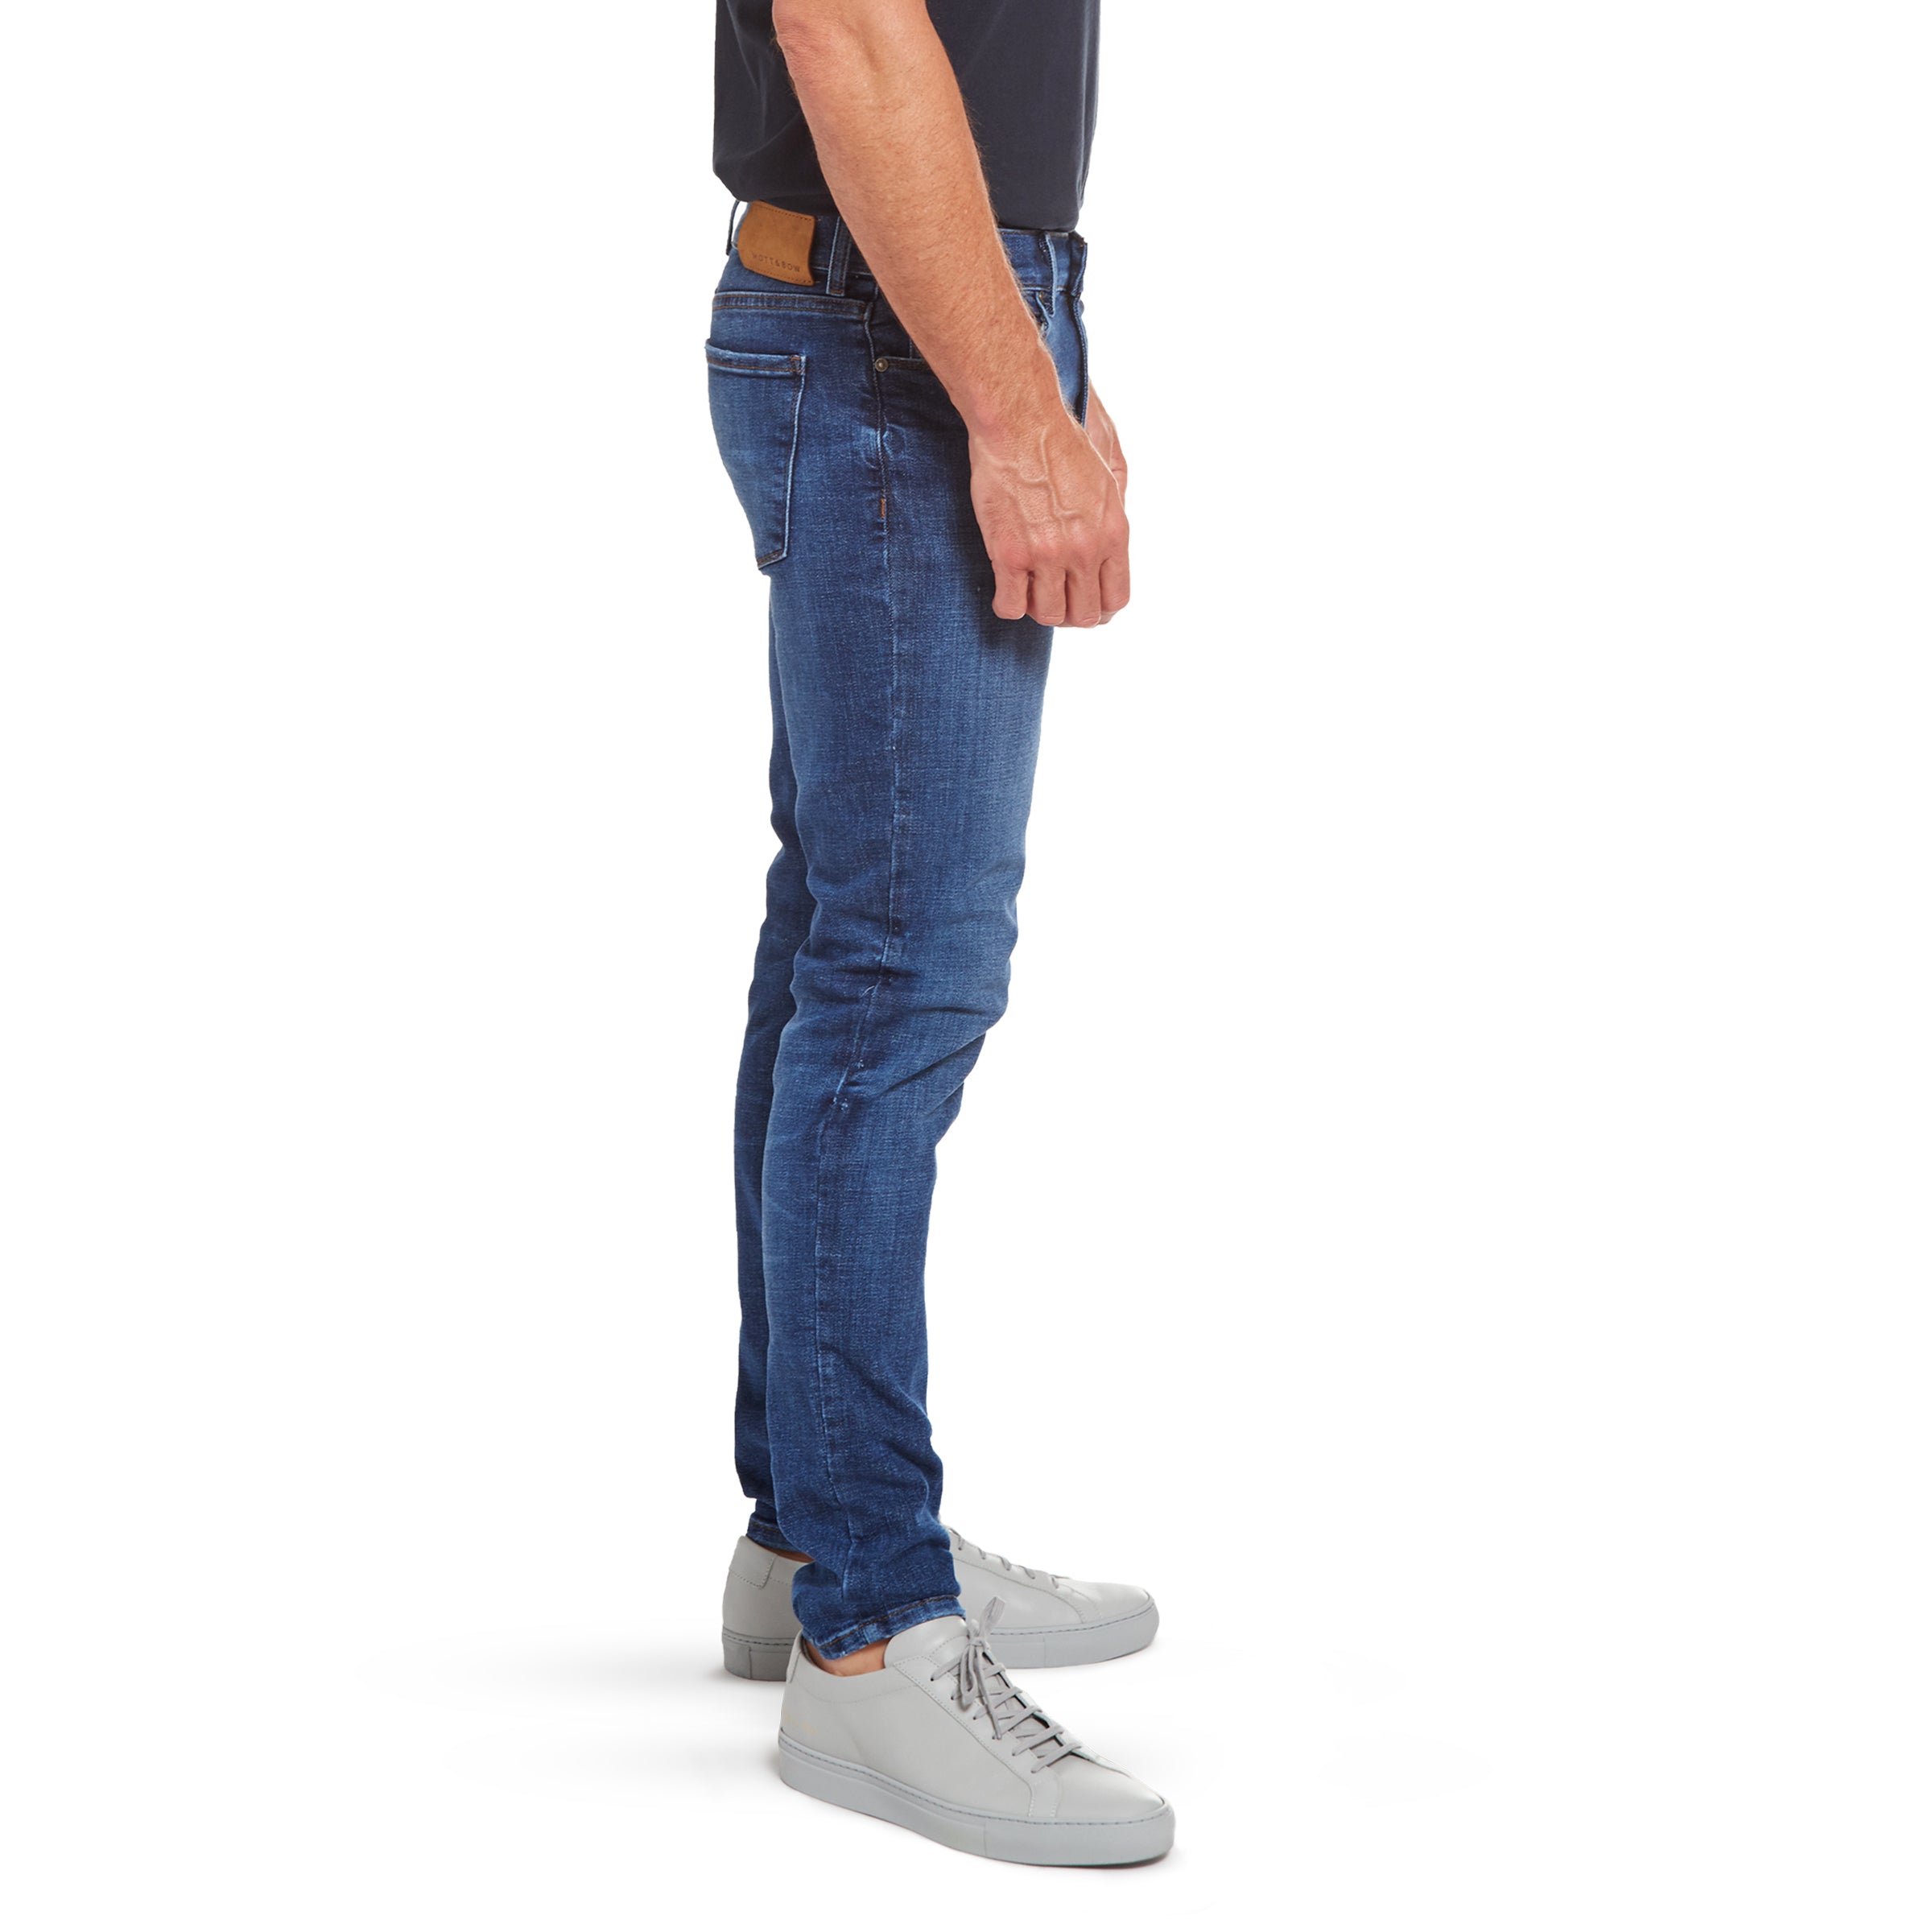 Men wearing Bleu clair/Médium Skinny Wooster Jeans